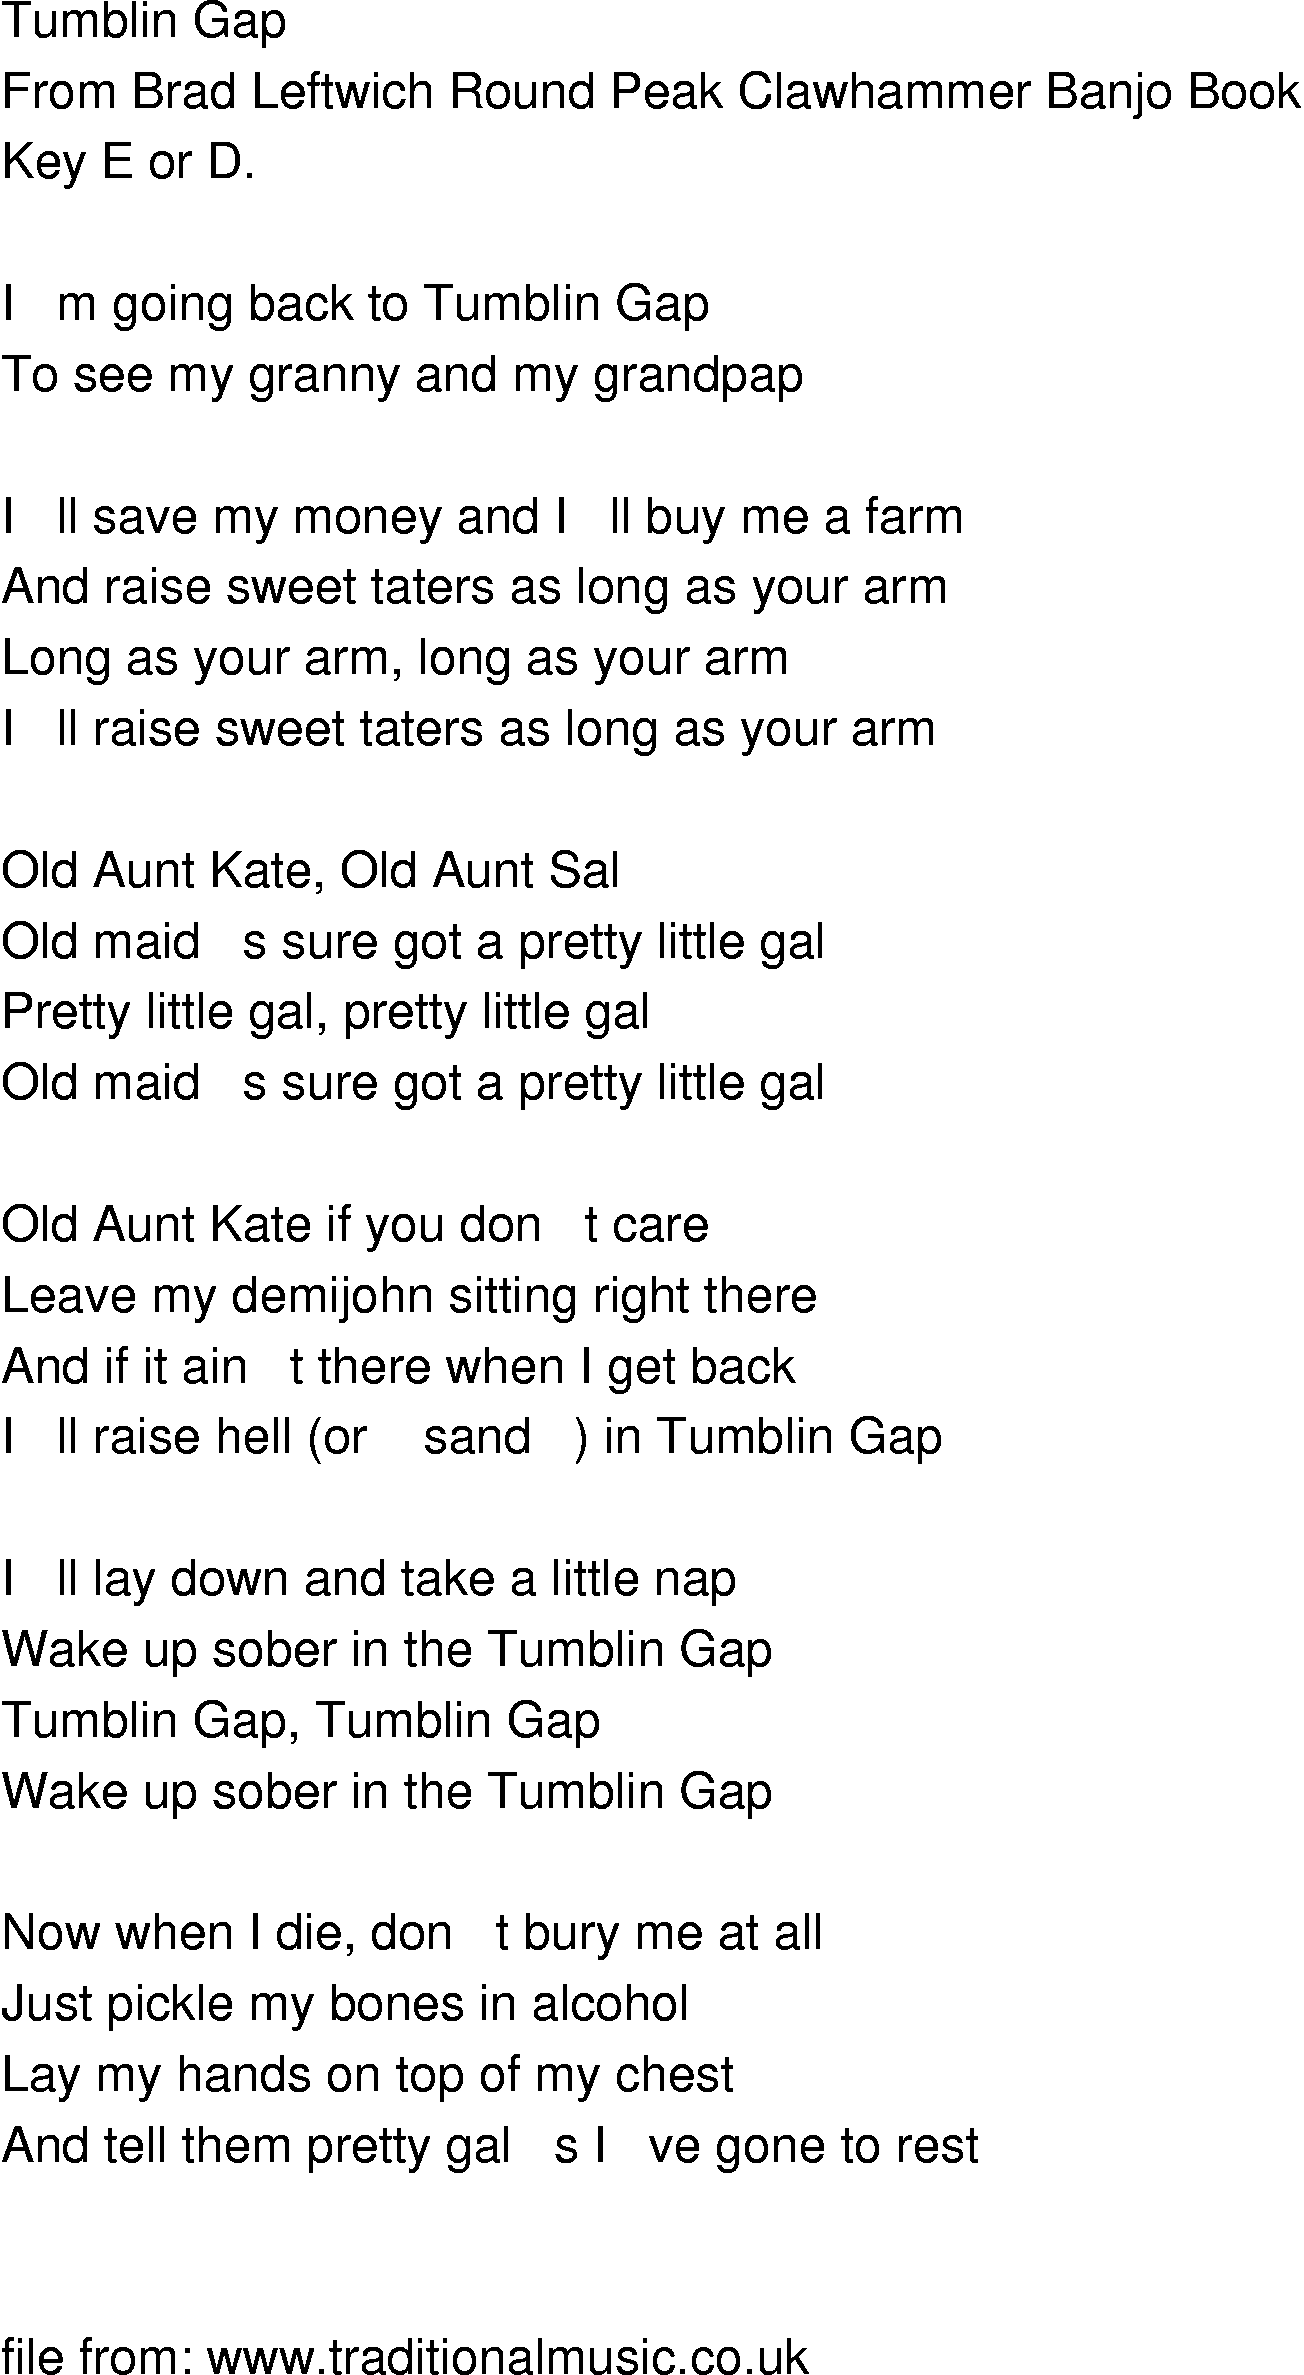 Old-Time (oldtimey) Song Lyrics - tumblin gap